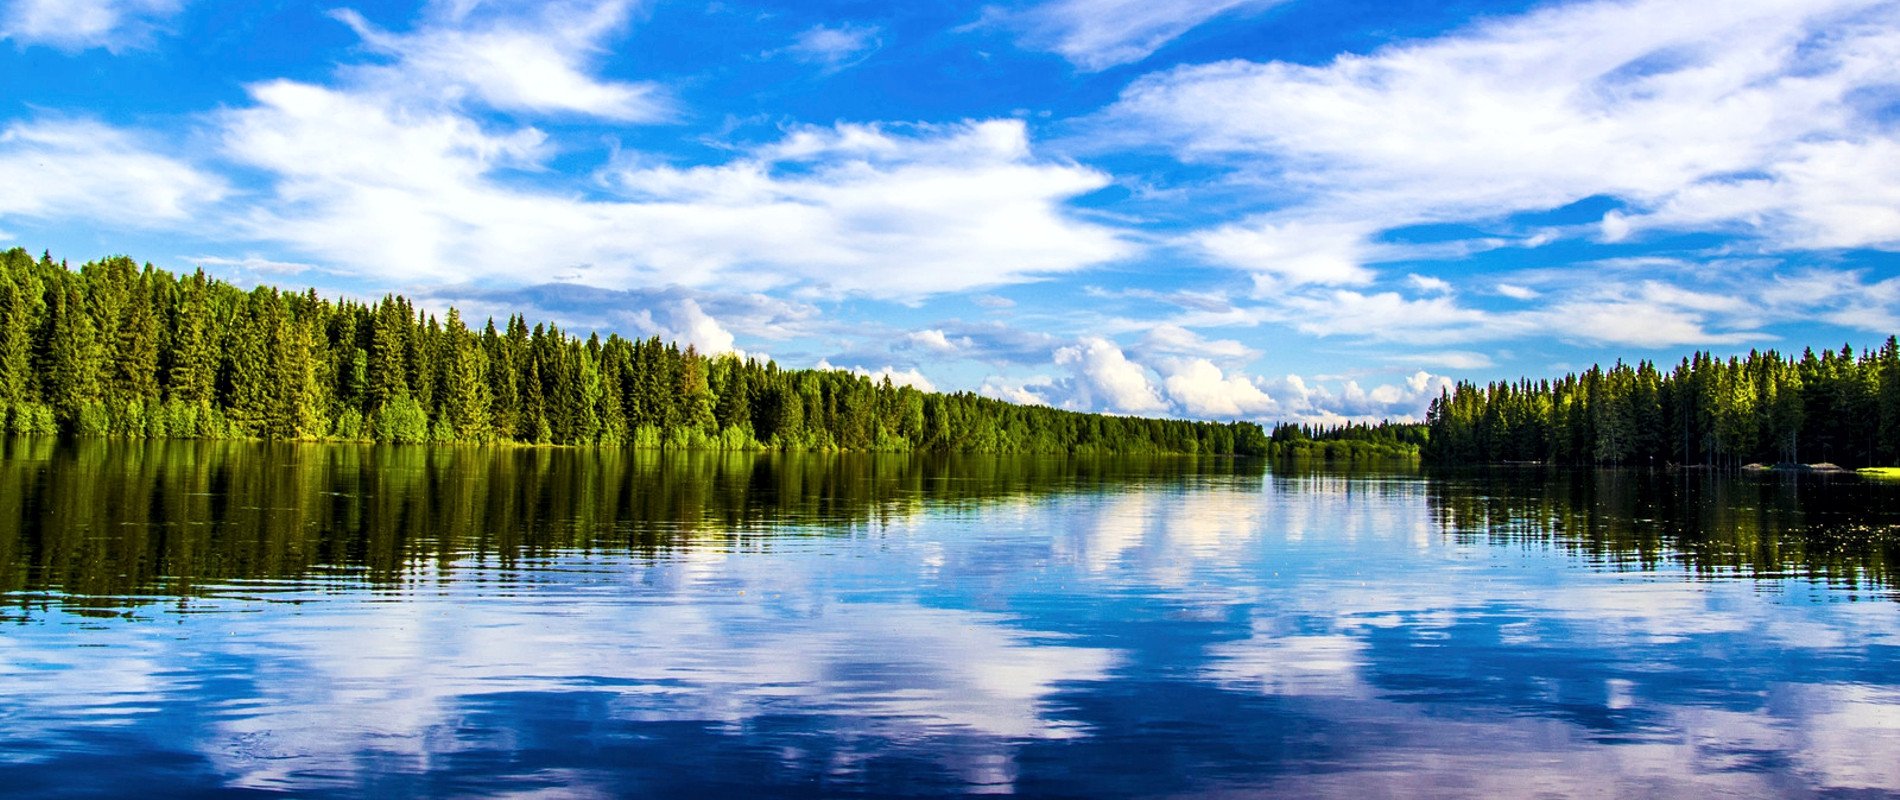 Lake in Khanty Mansi Autonomous Okrug, Russia